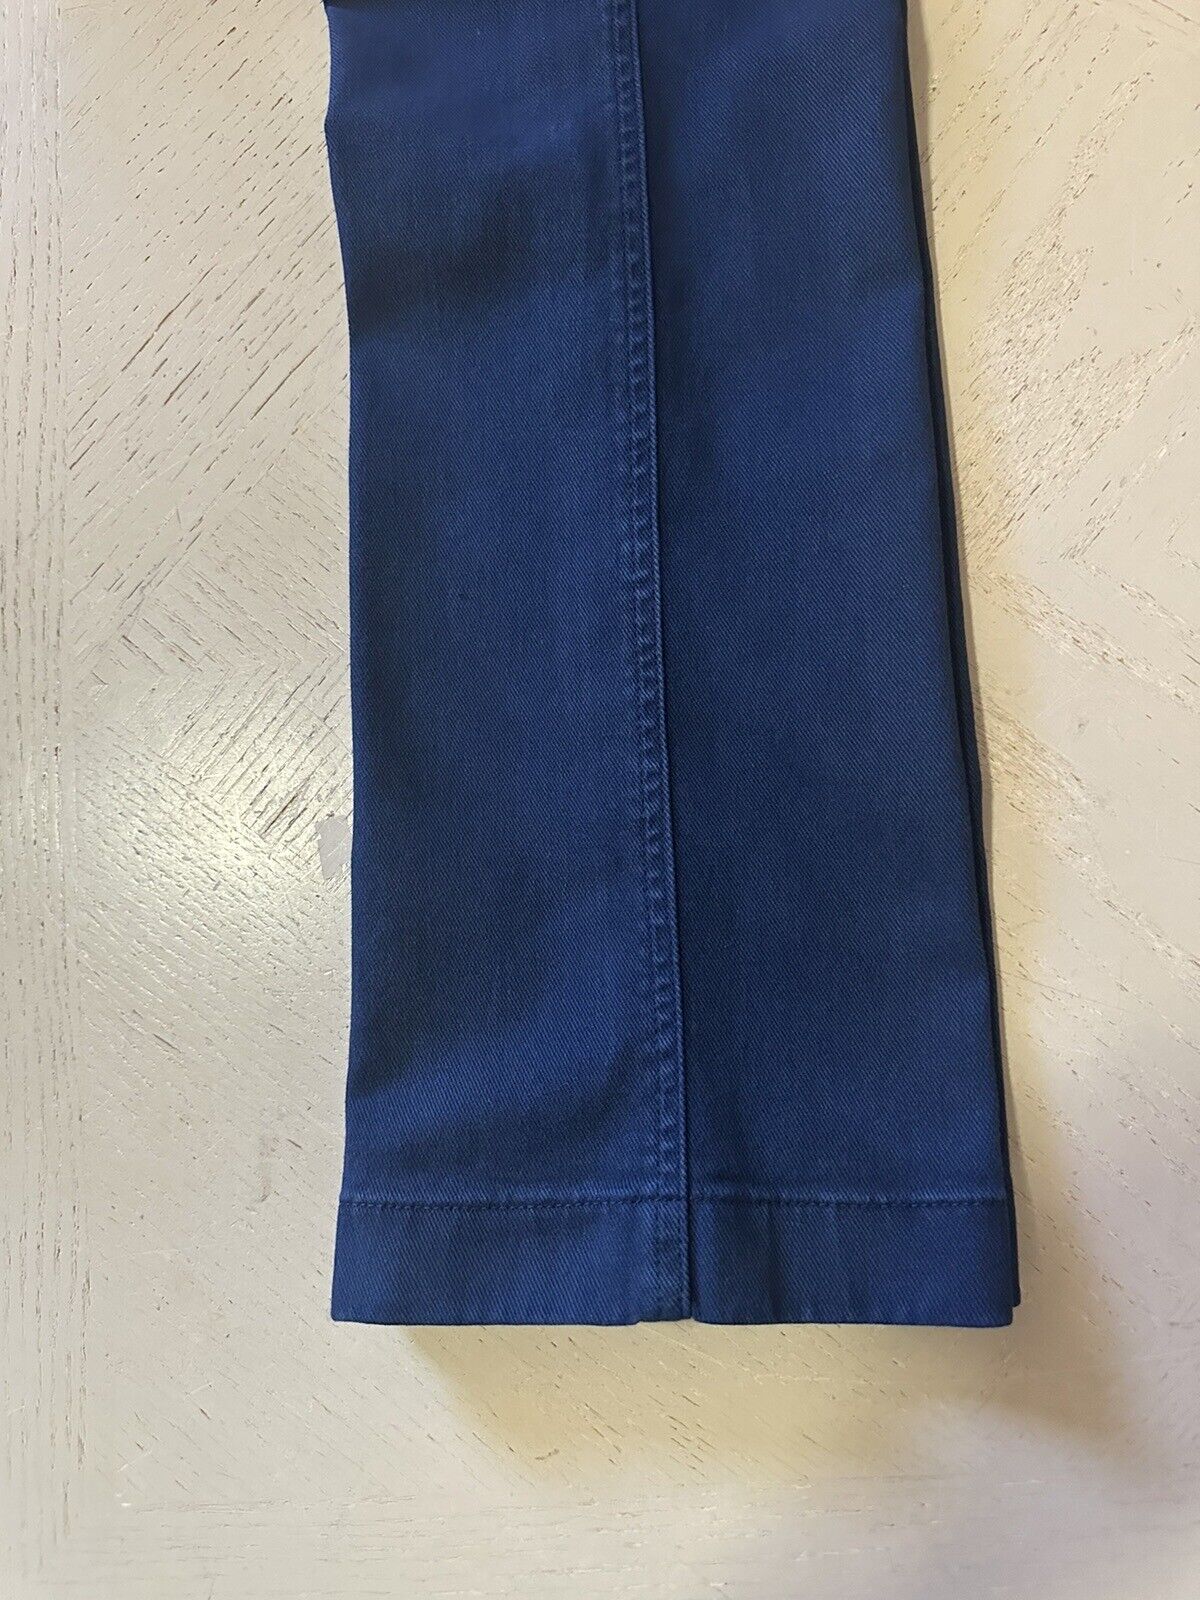 New $725 Loro Piana Derrien Cotton Blend Casual Pants DK Blue 38/4 Italy